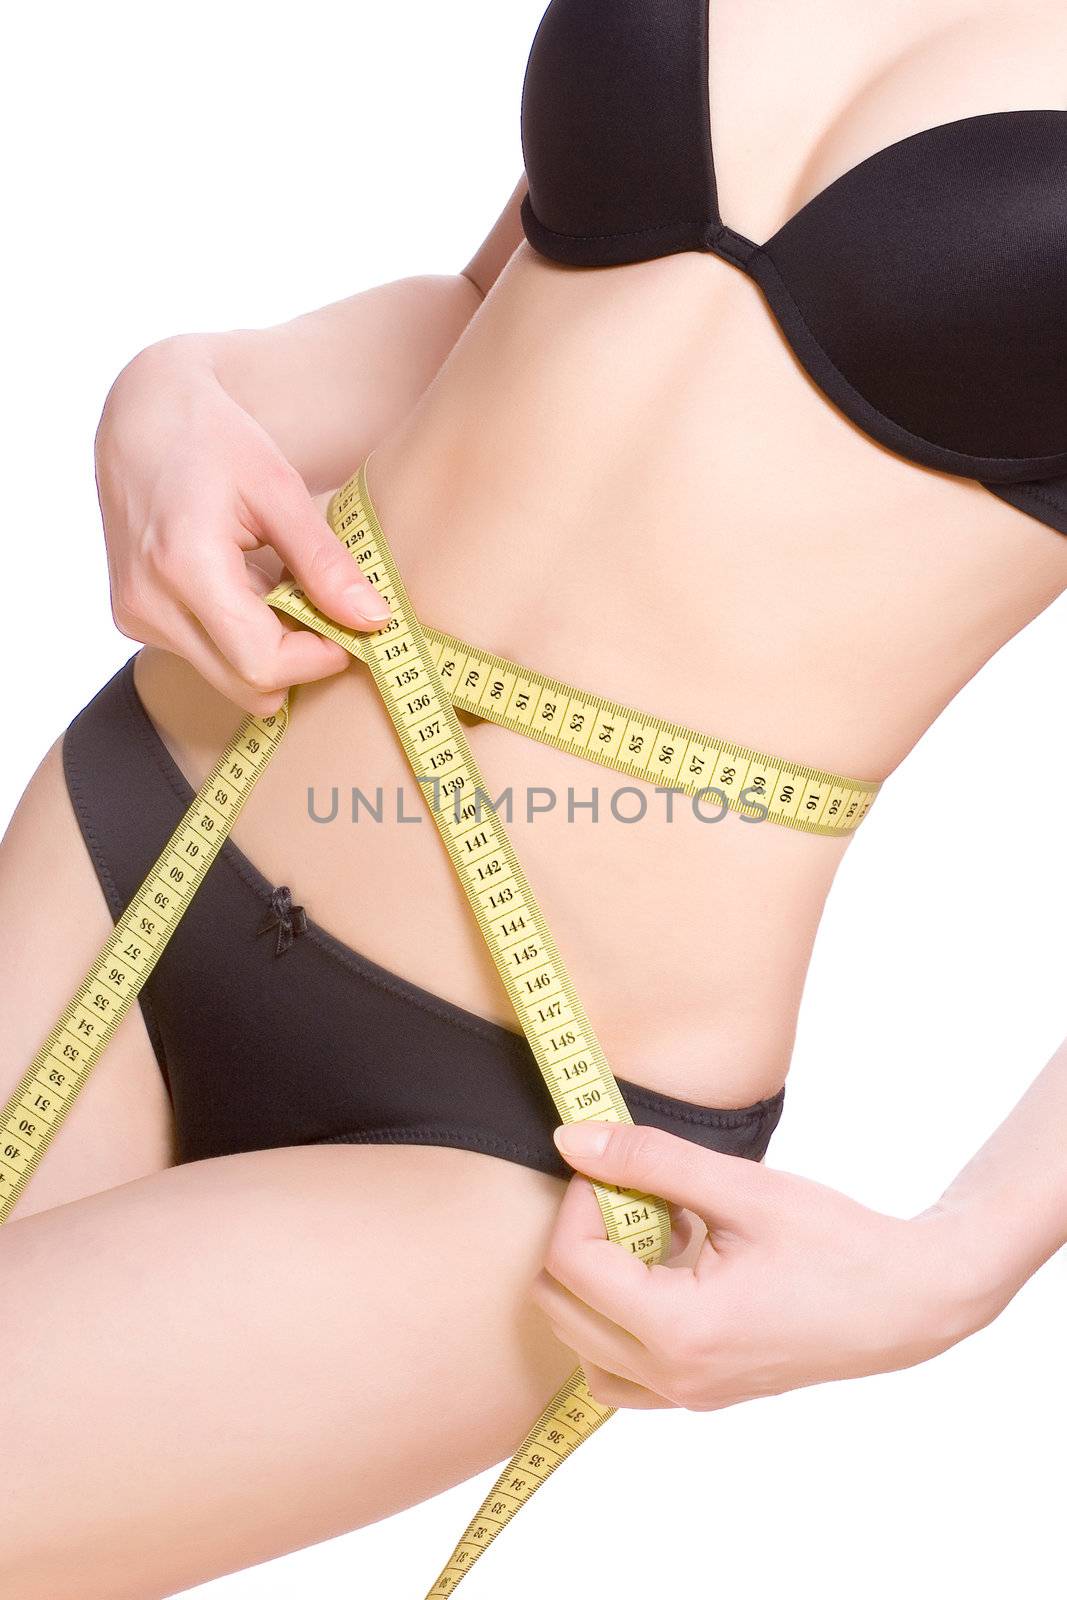 beautiful woman in lingerie measuring her waist